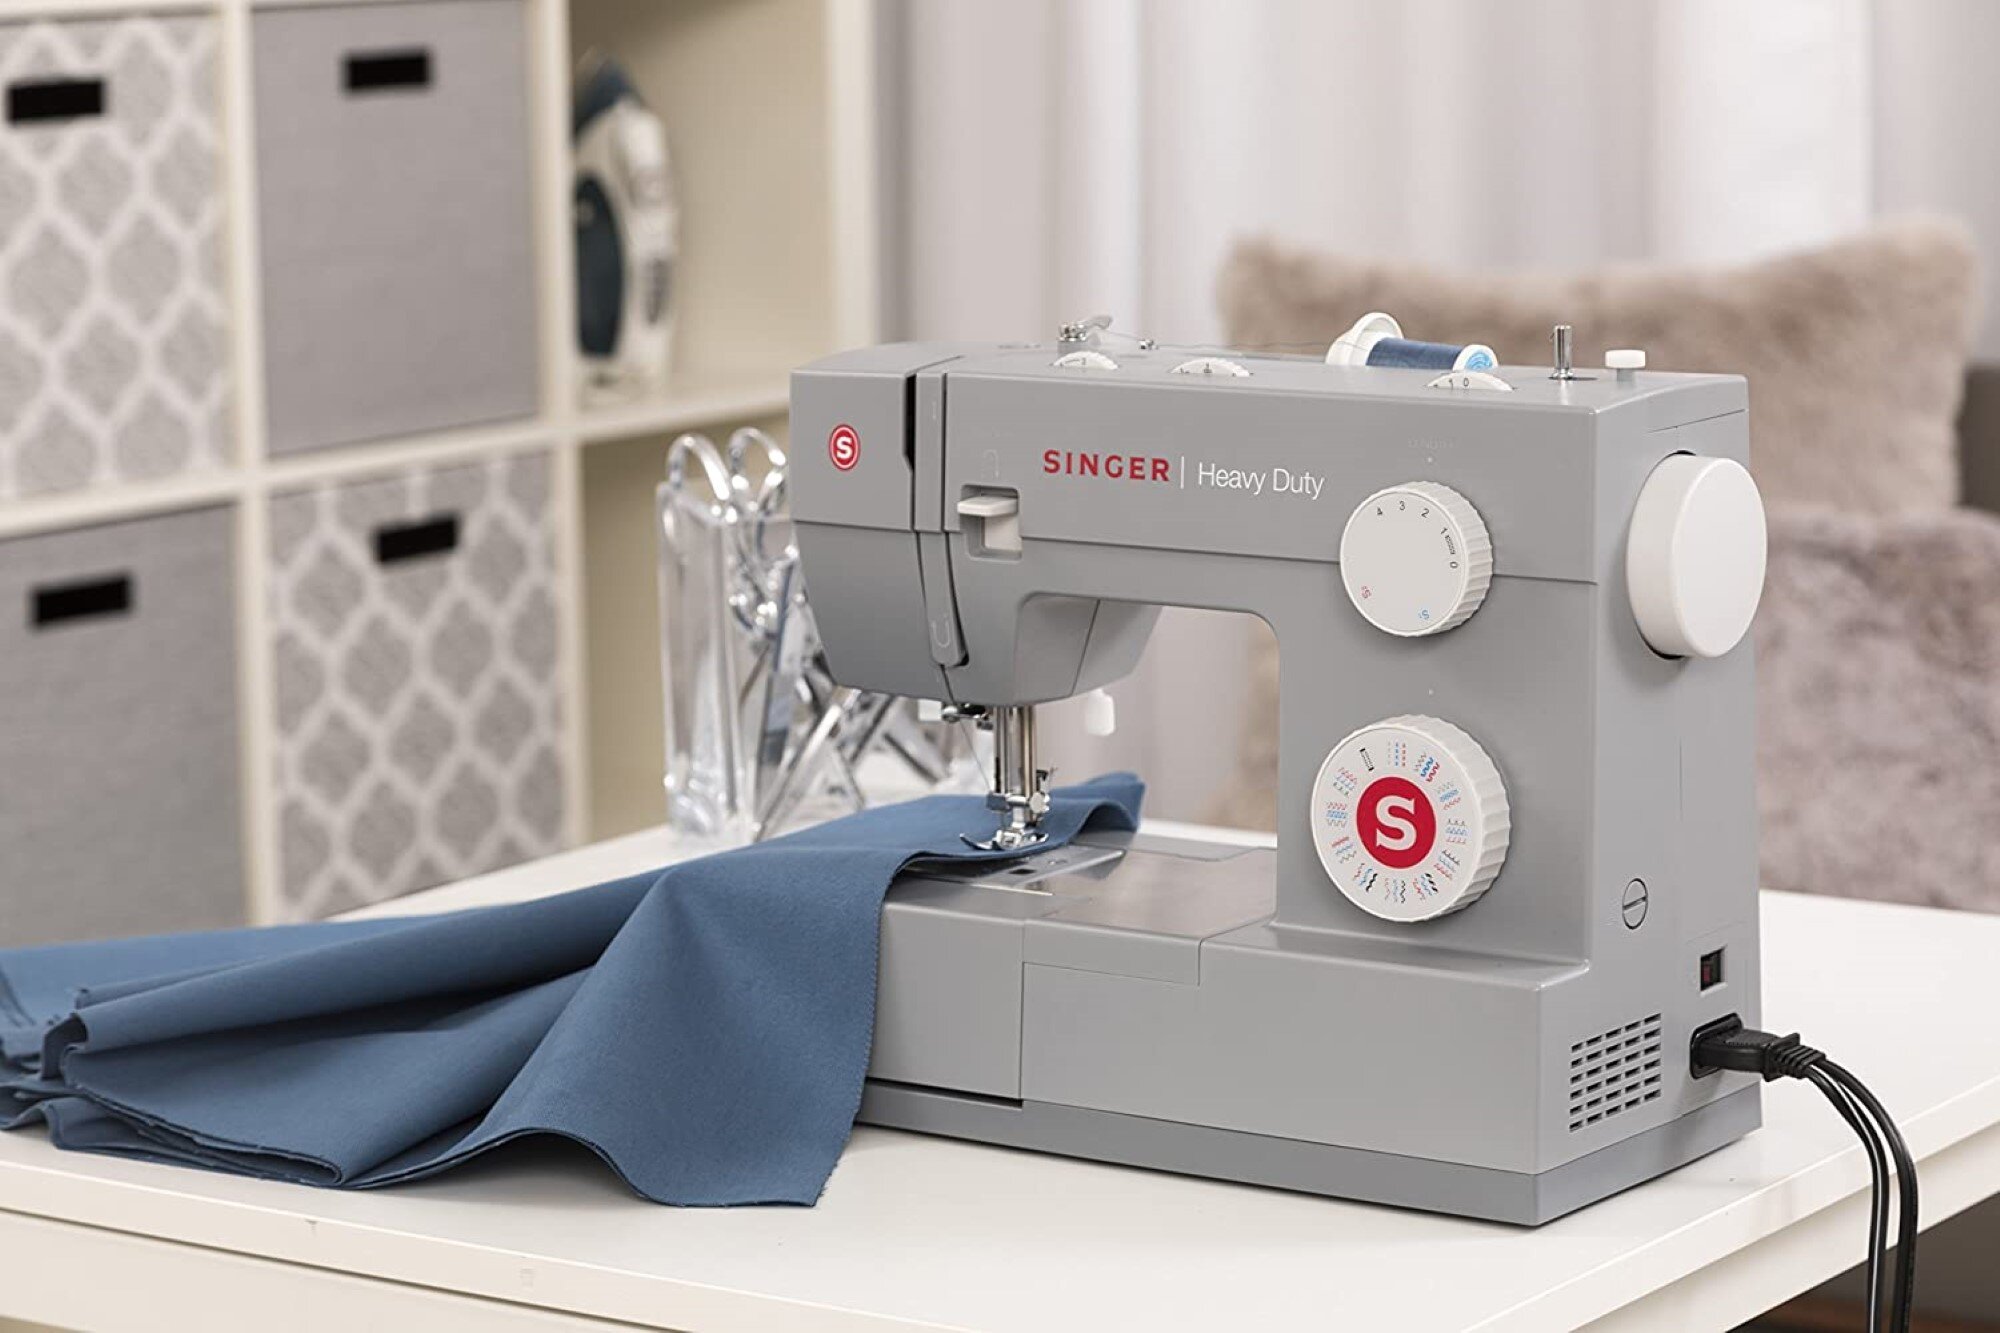 Pair-Of-Singer-Sewing-Machines-Fabric-Sewing-Basket-More